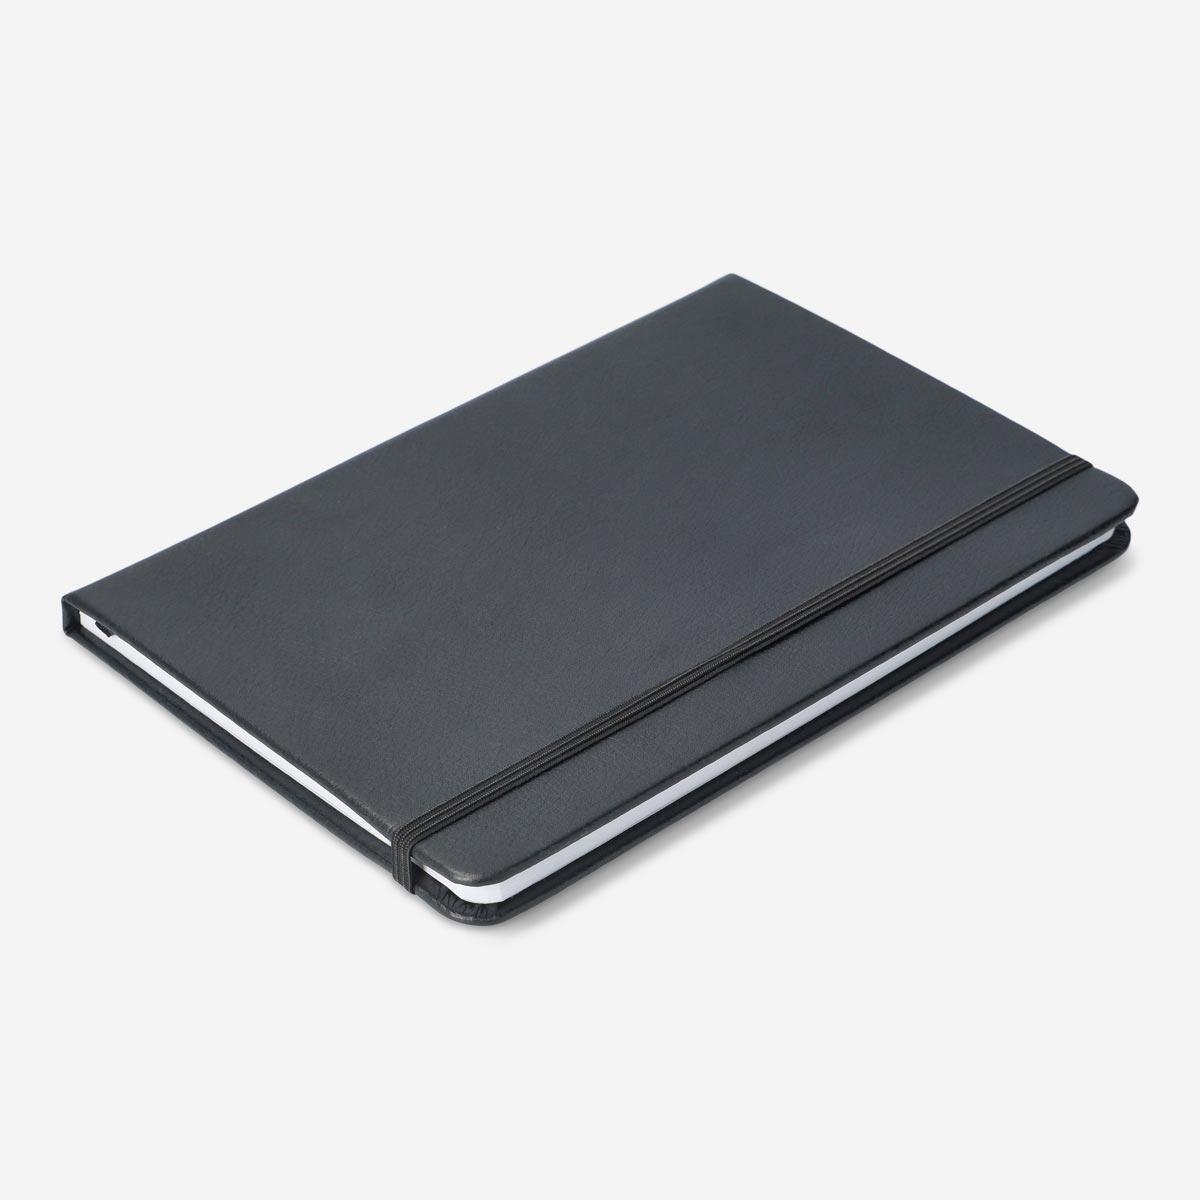 Black notebook. a5